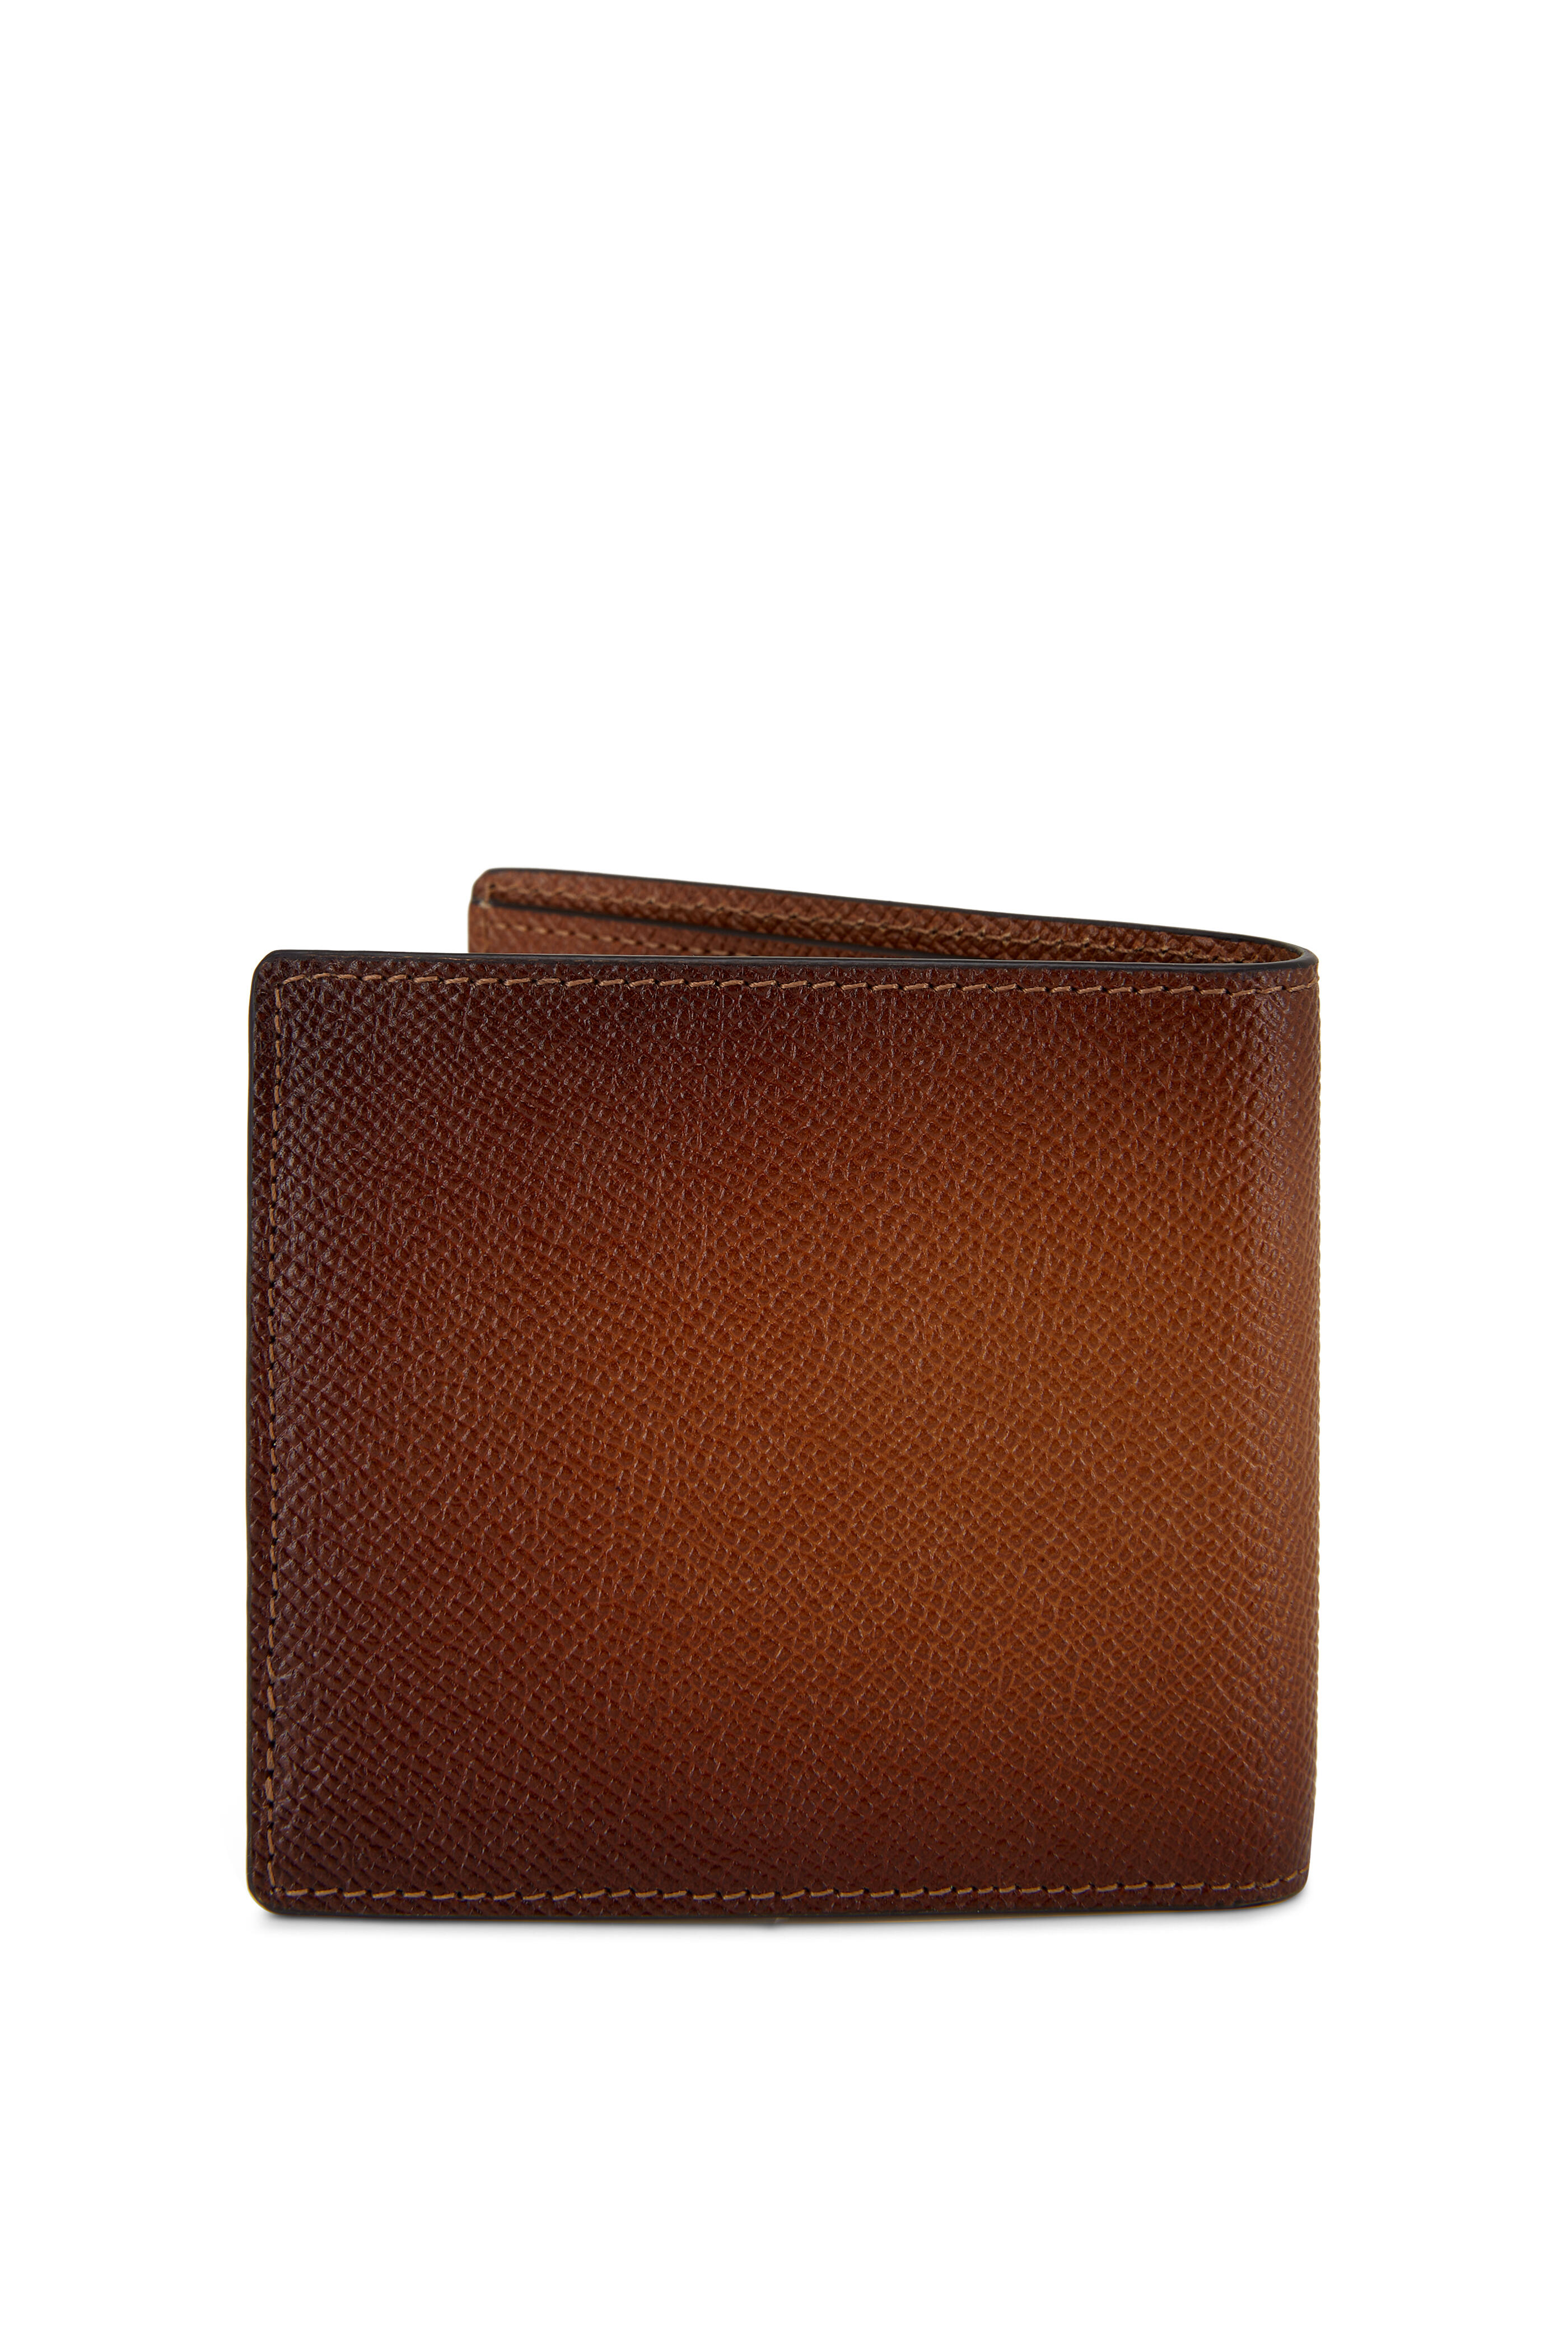 Santoni - Brown Leather Bi-Fold Wallet | Mitchell Stores